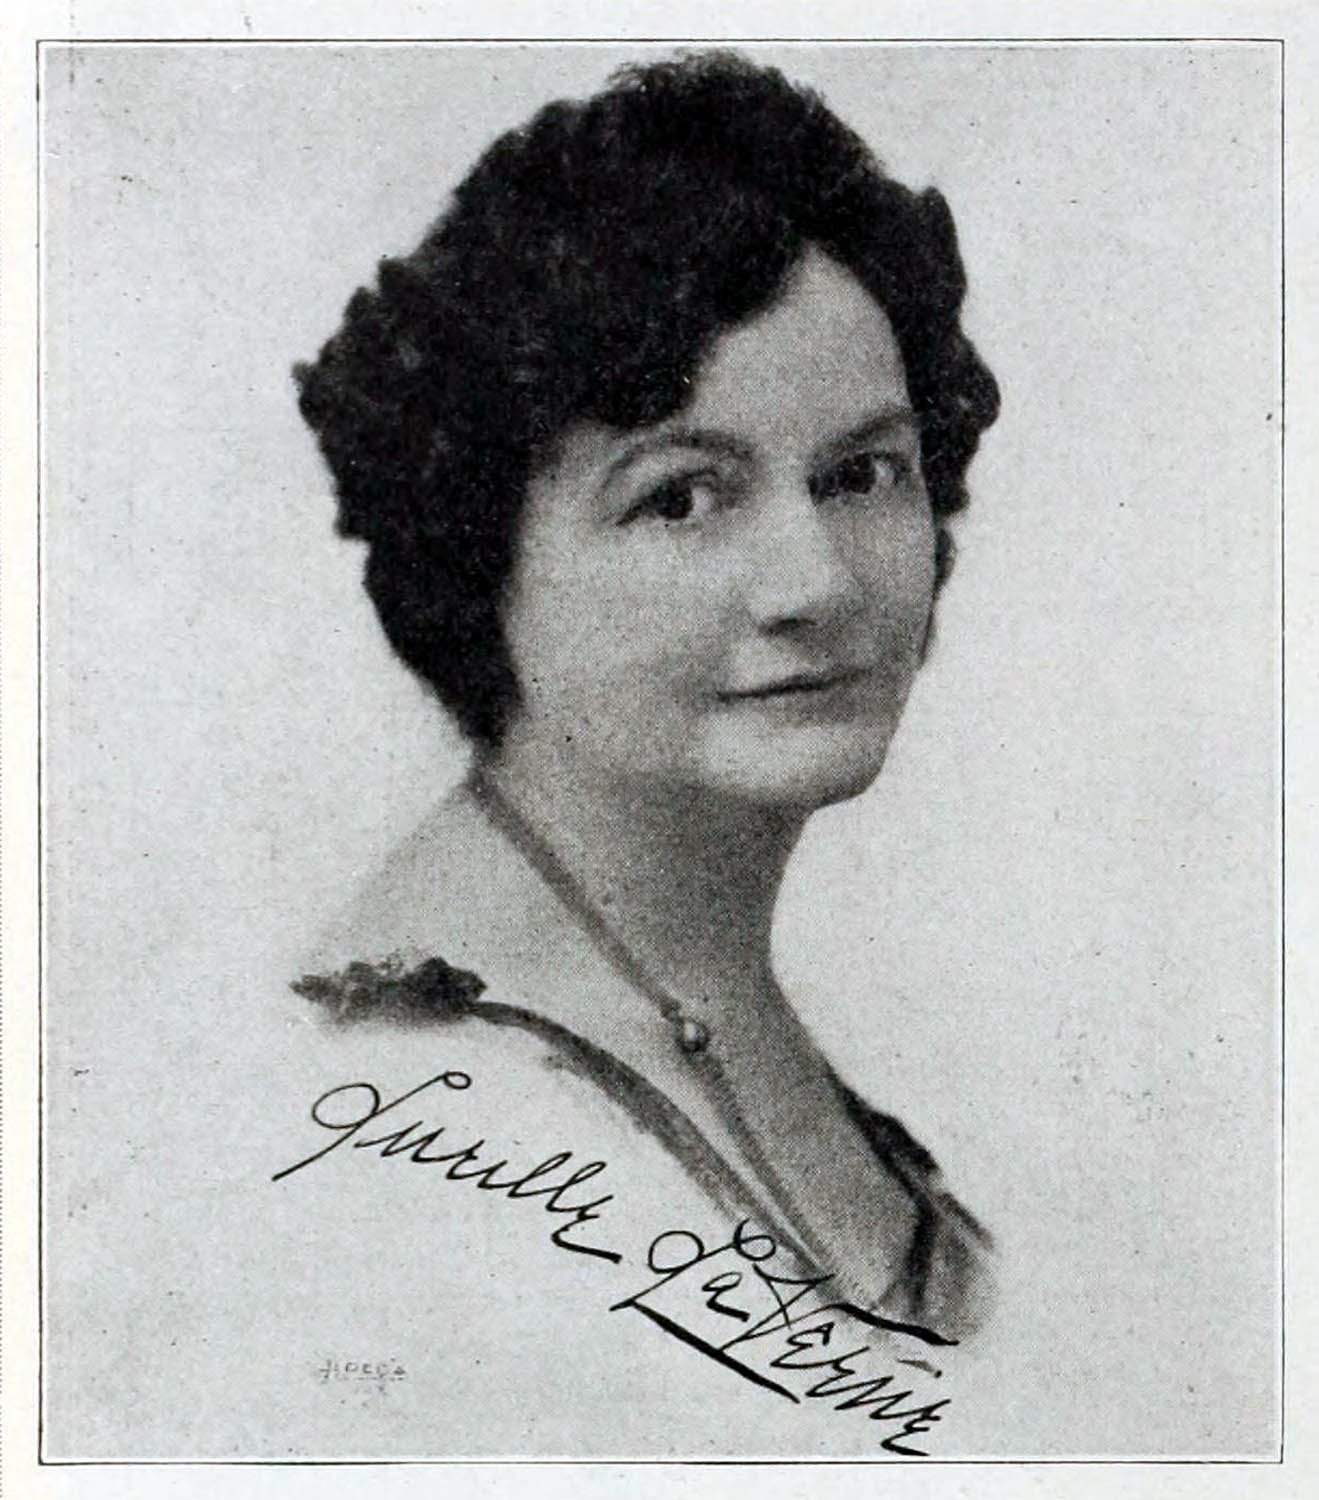 Lucille La Verne